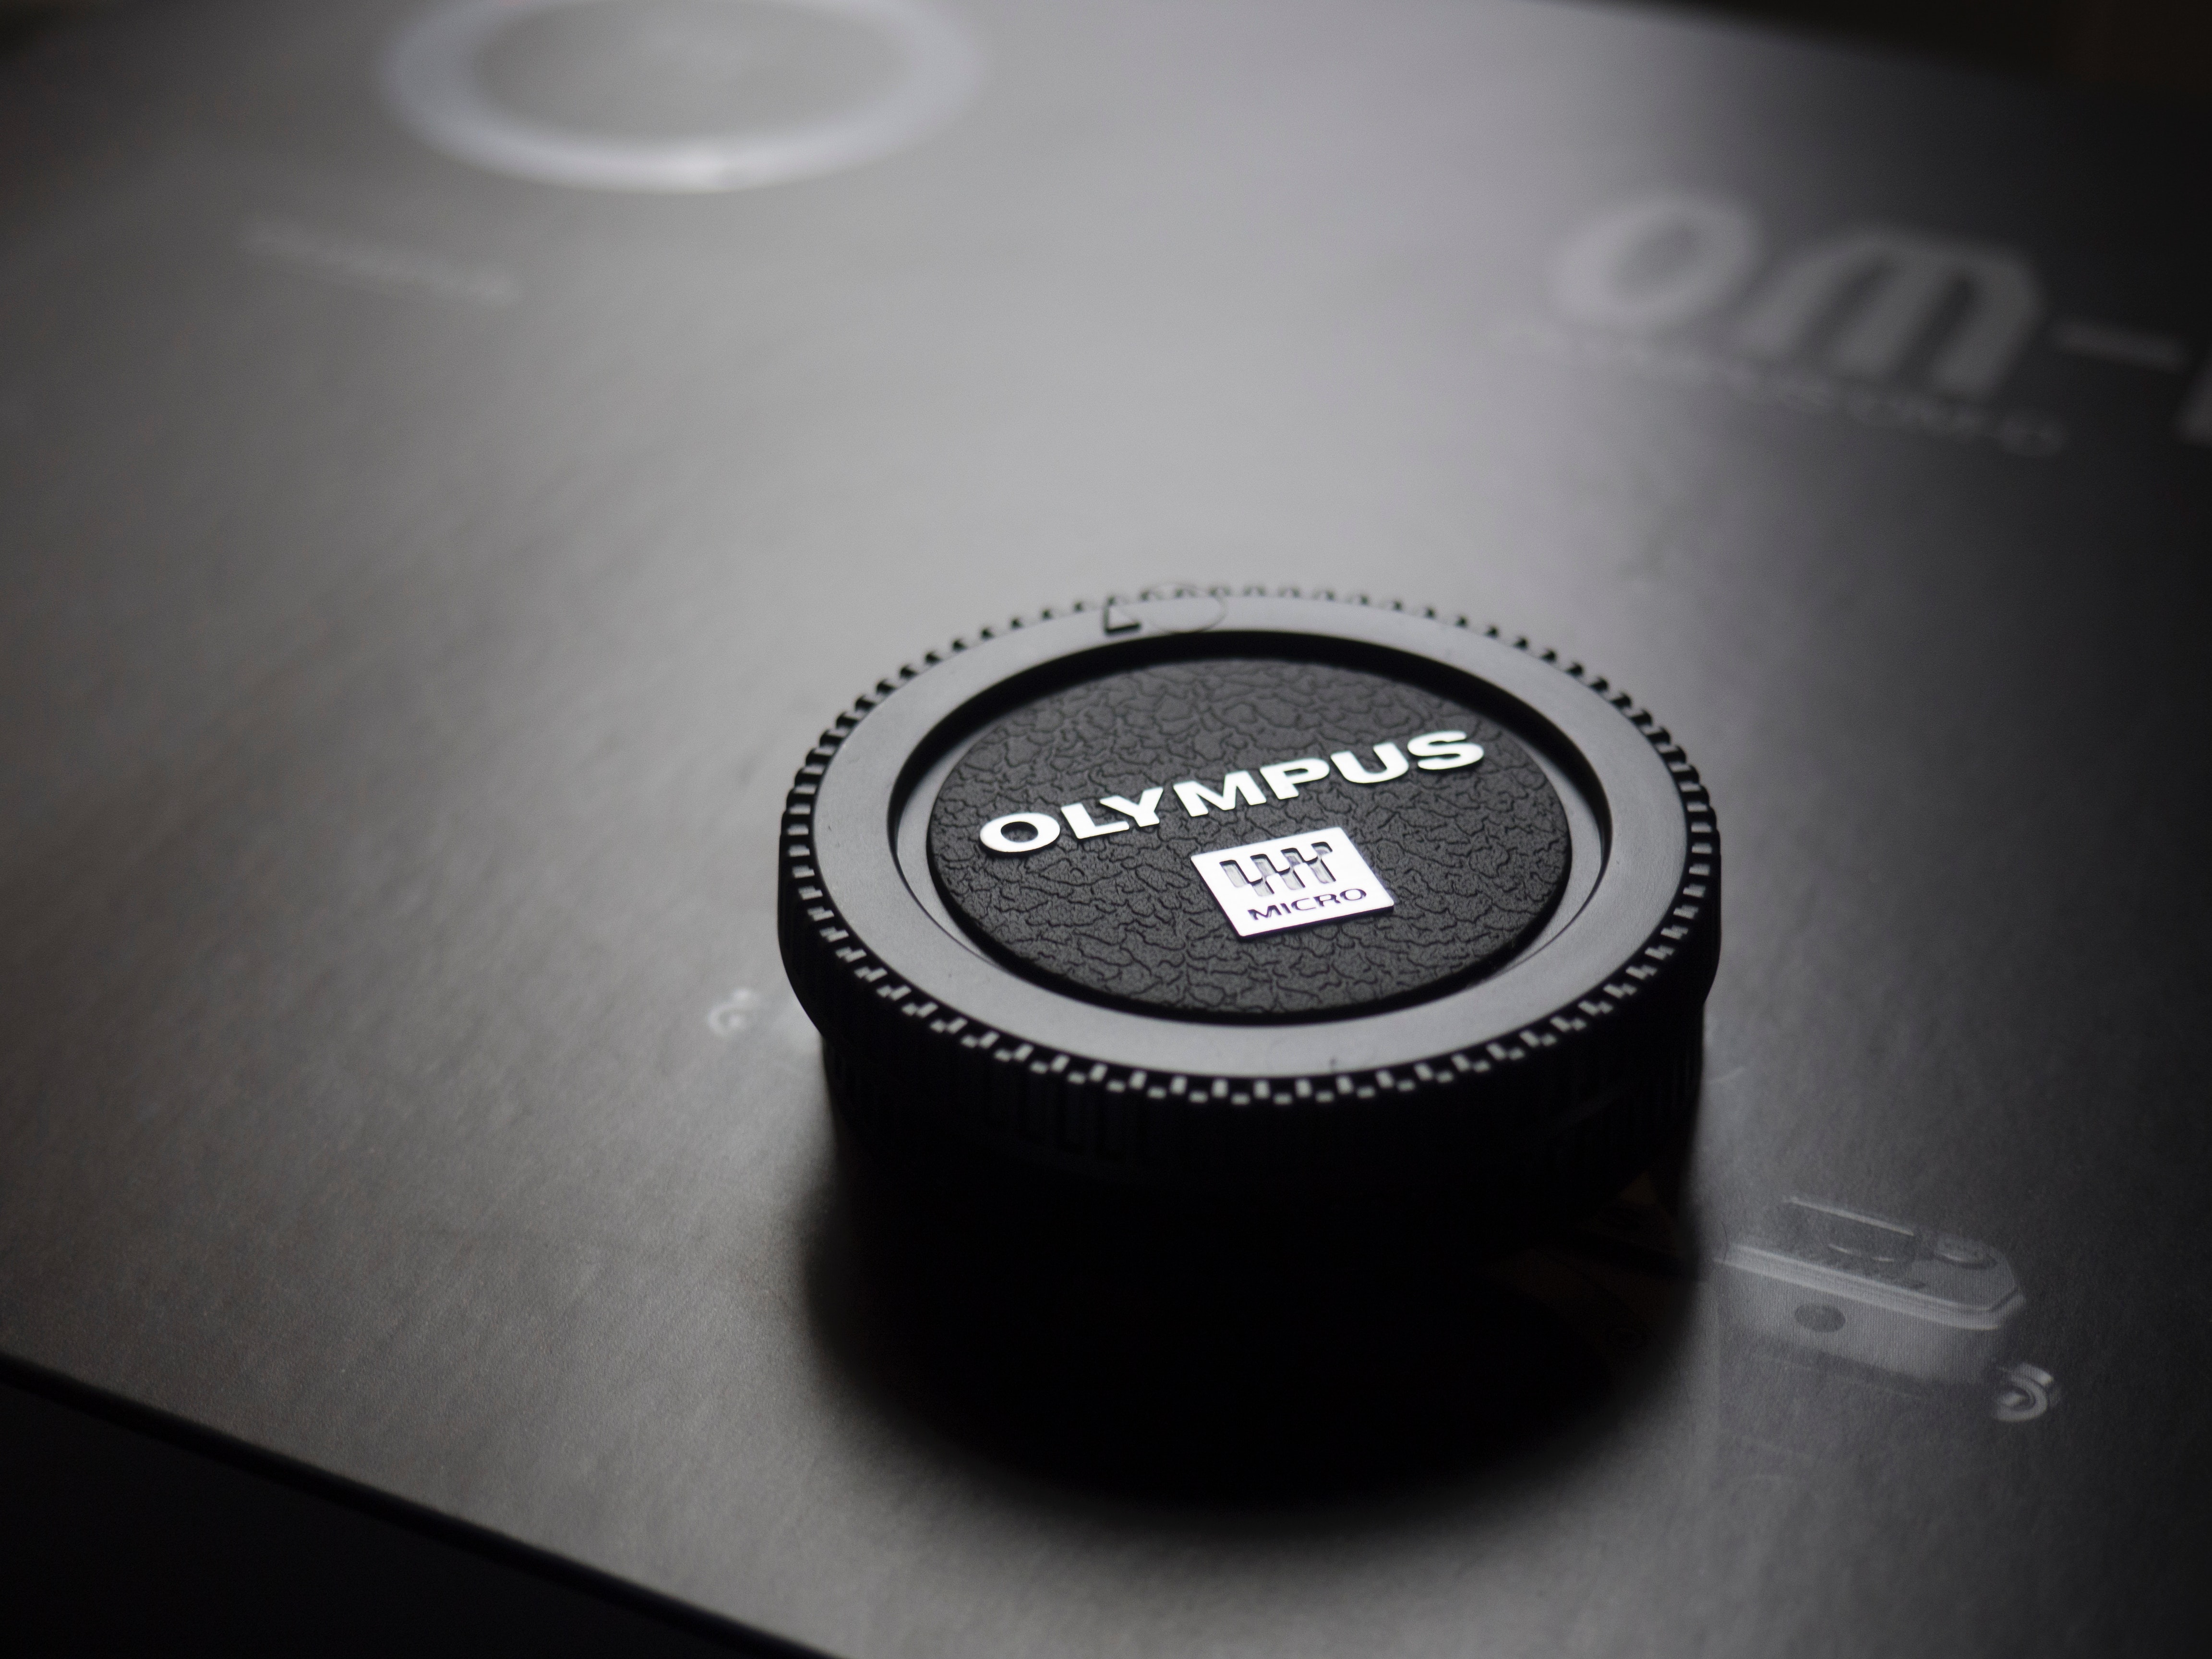 Olympus camera lens cap placed on box photo